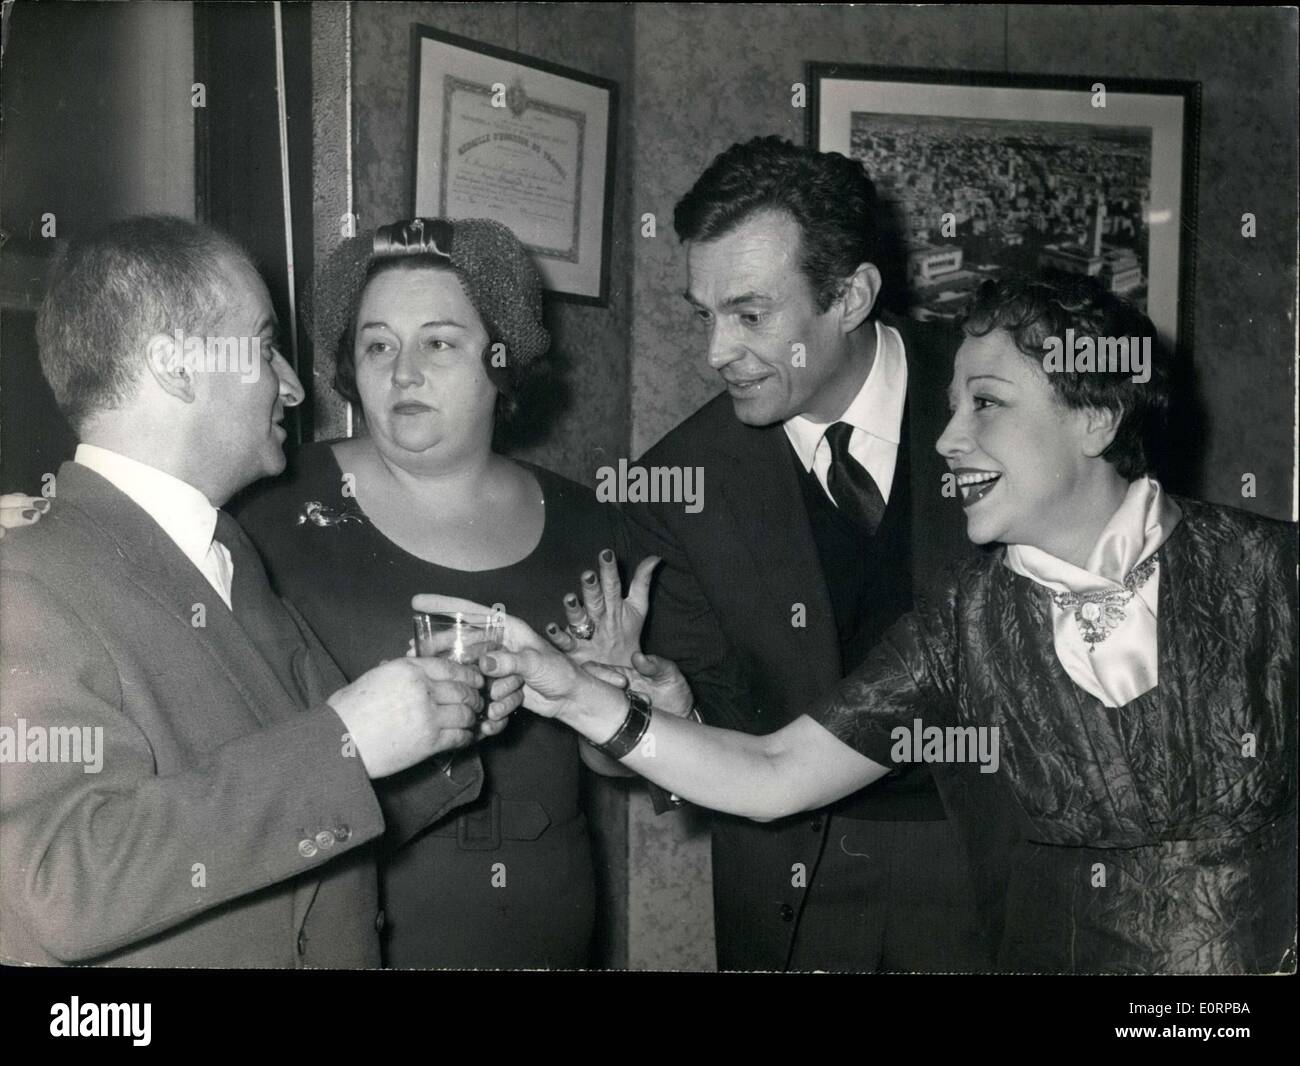 Febbraio 13, 1960 - da sinistra a destra: Louis de Funes, Mathide Casadesus, Pierre Dudan e Mireille Perrey. Foto Stock